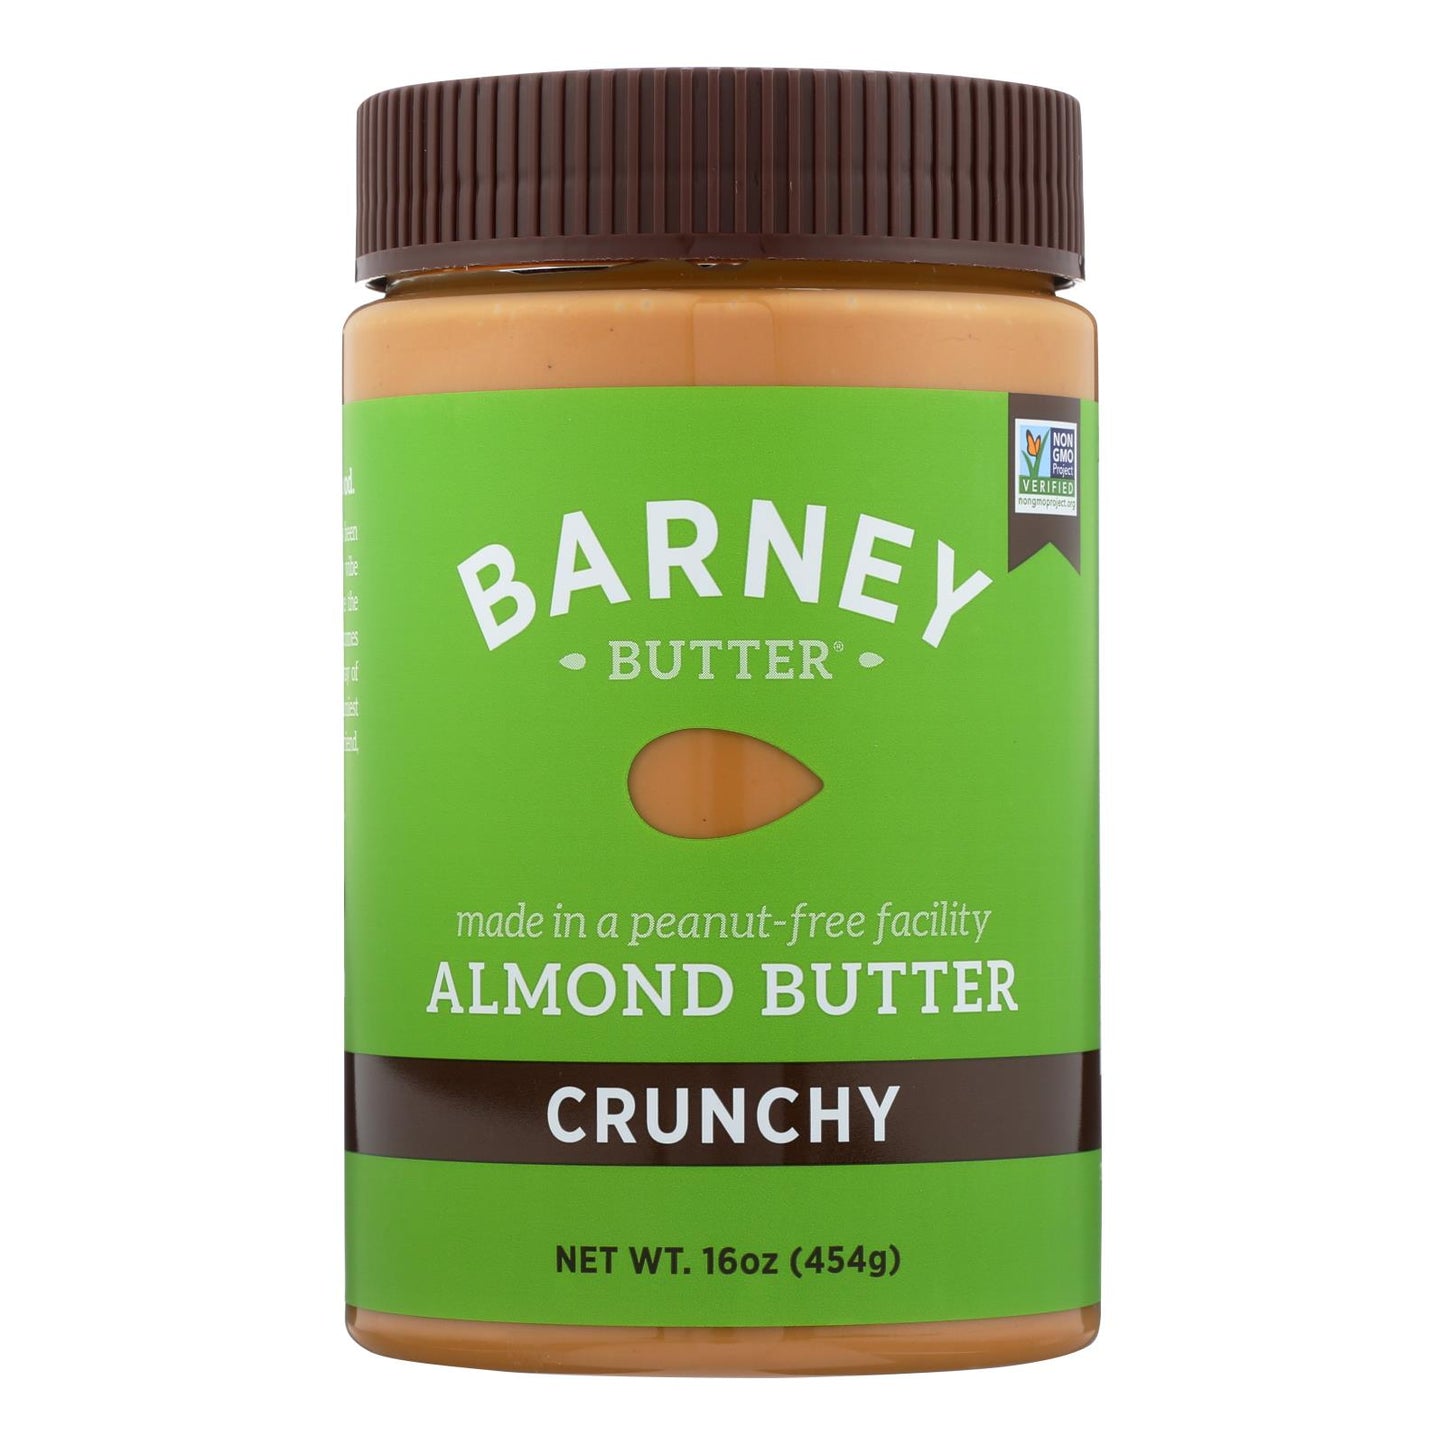 Barney Butter - Almond Butter - Crunchy - Case Of 6 - 16 Oz.